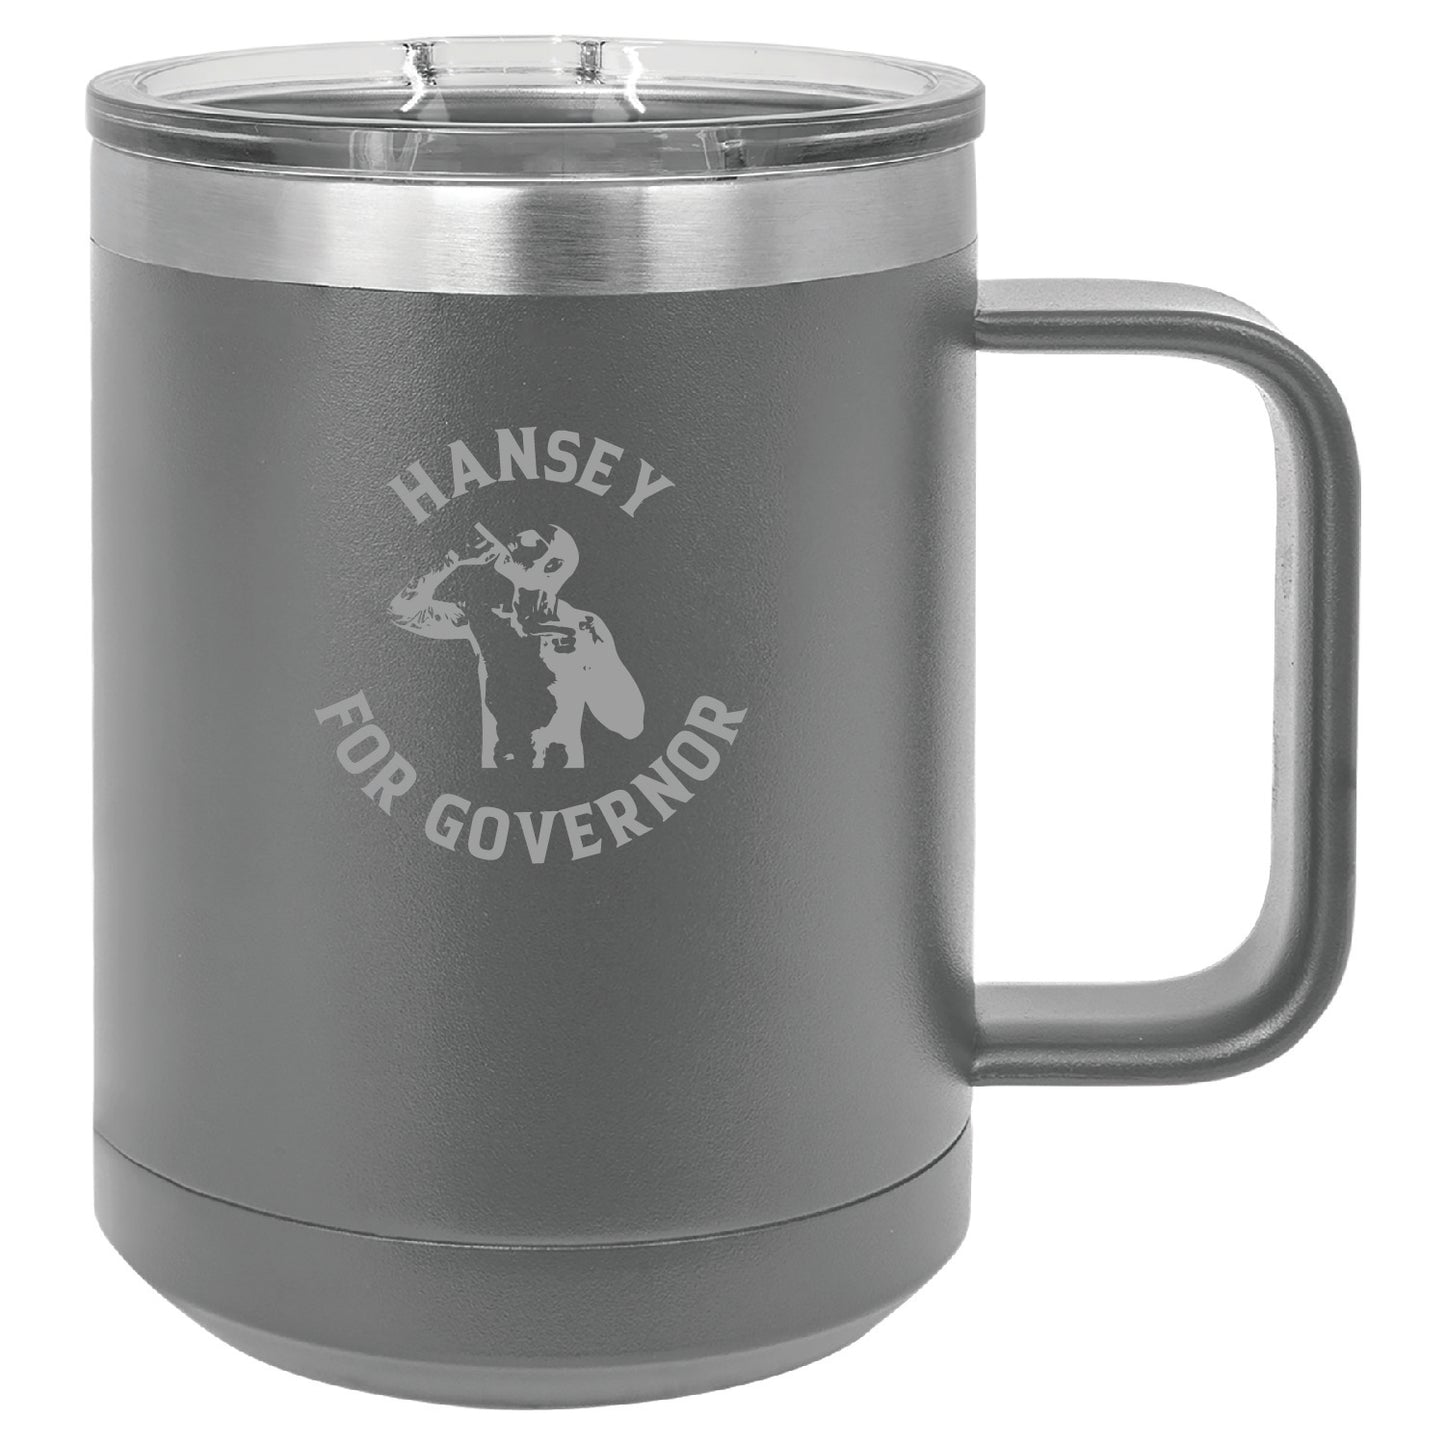 Hansey For Governor 15 oz Mug with Magnetic Lid